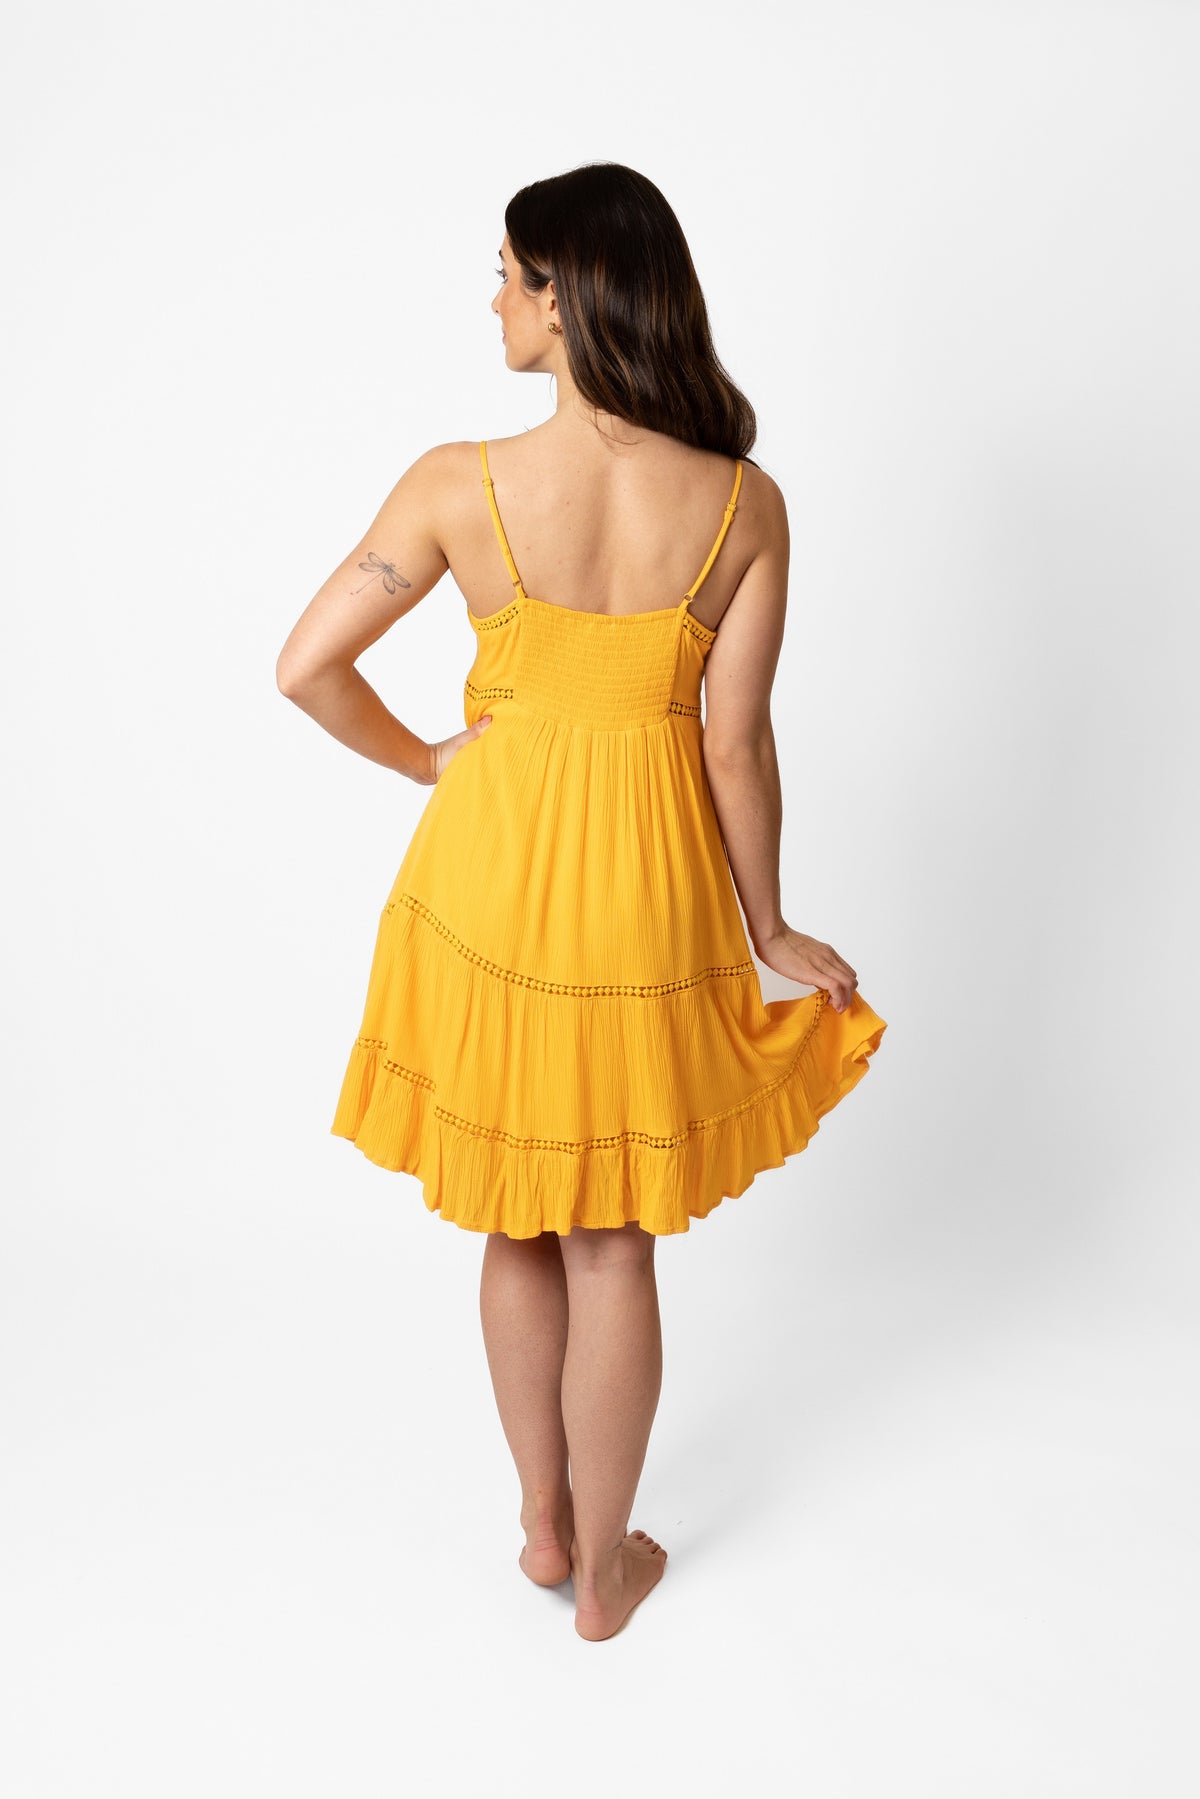 Miami Luxe Strappy Mini Dress in mango yellow